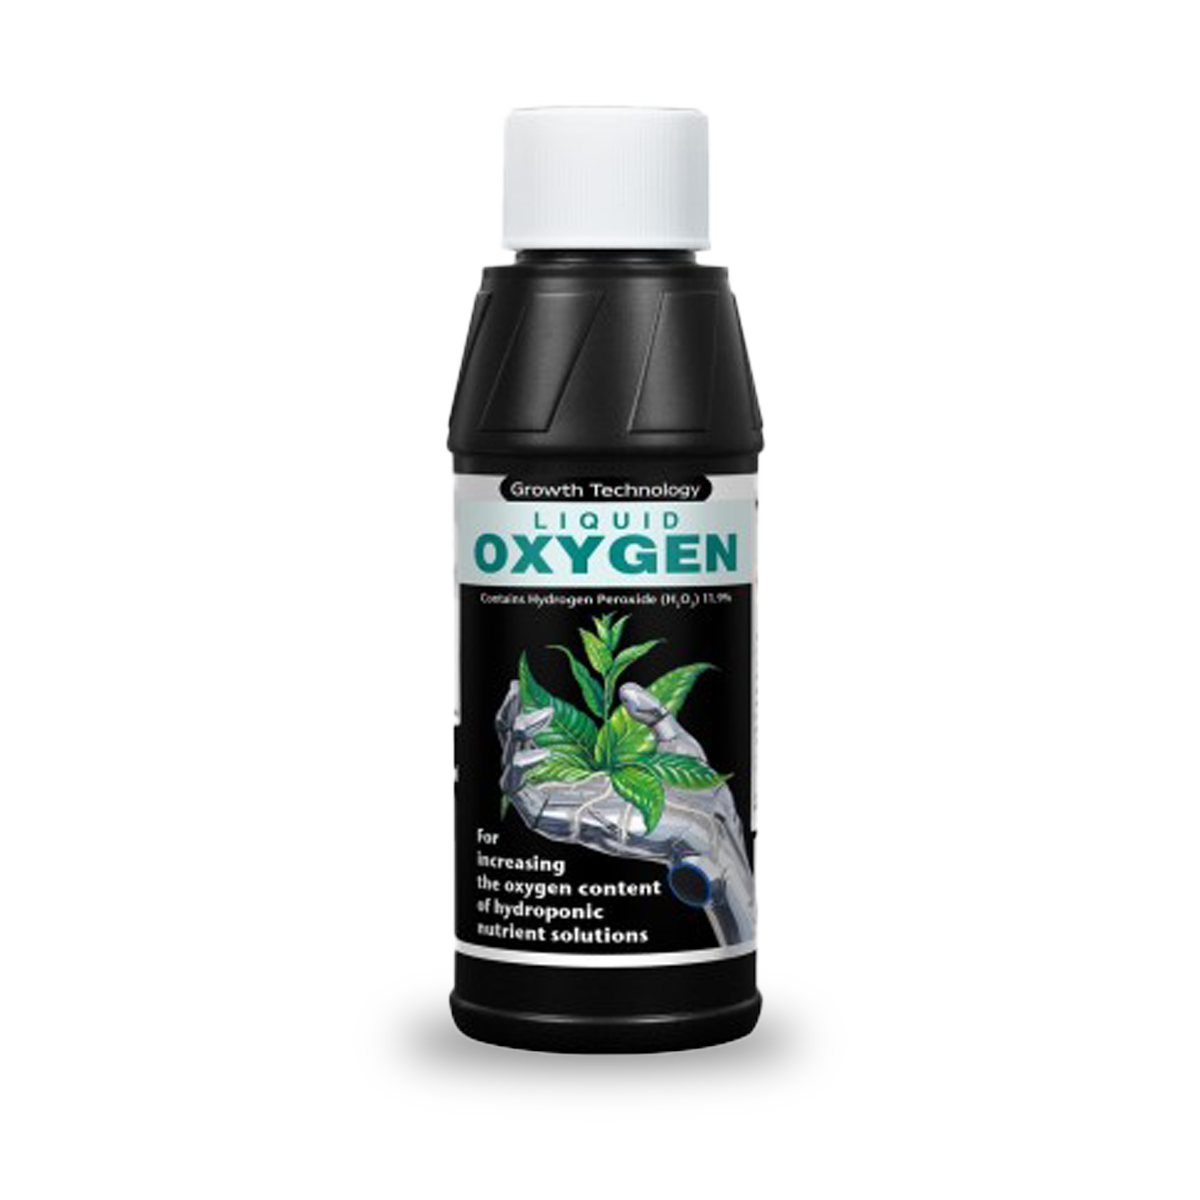 Liquid Oxygen 11.9%